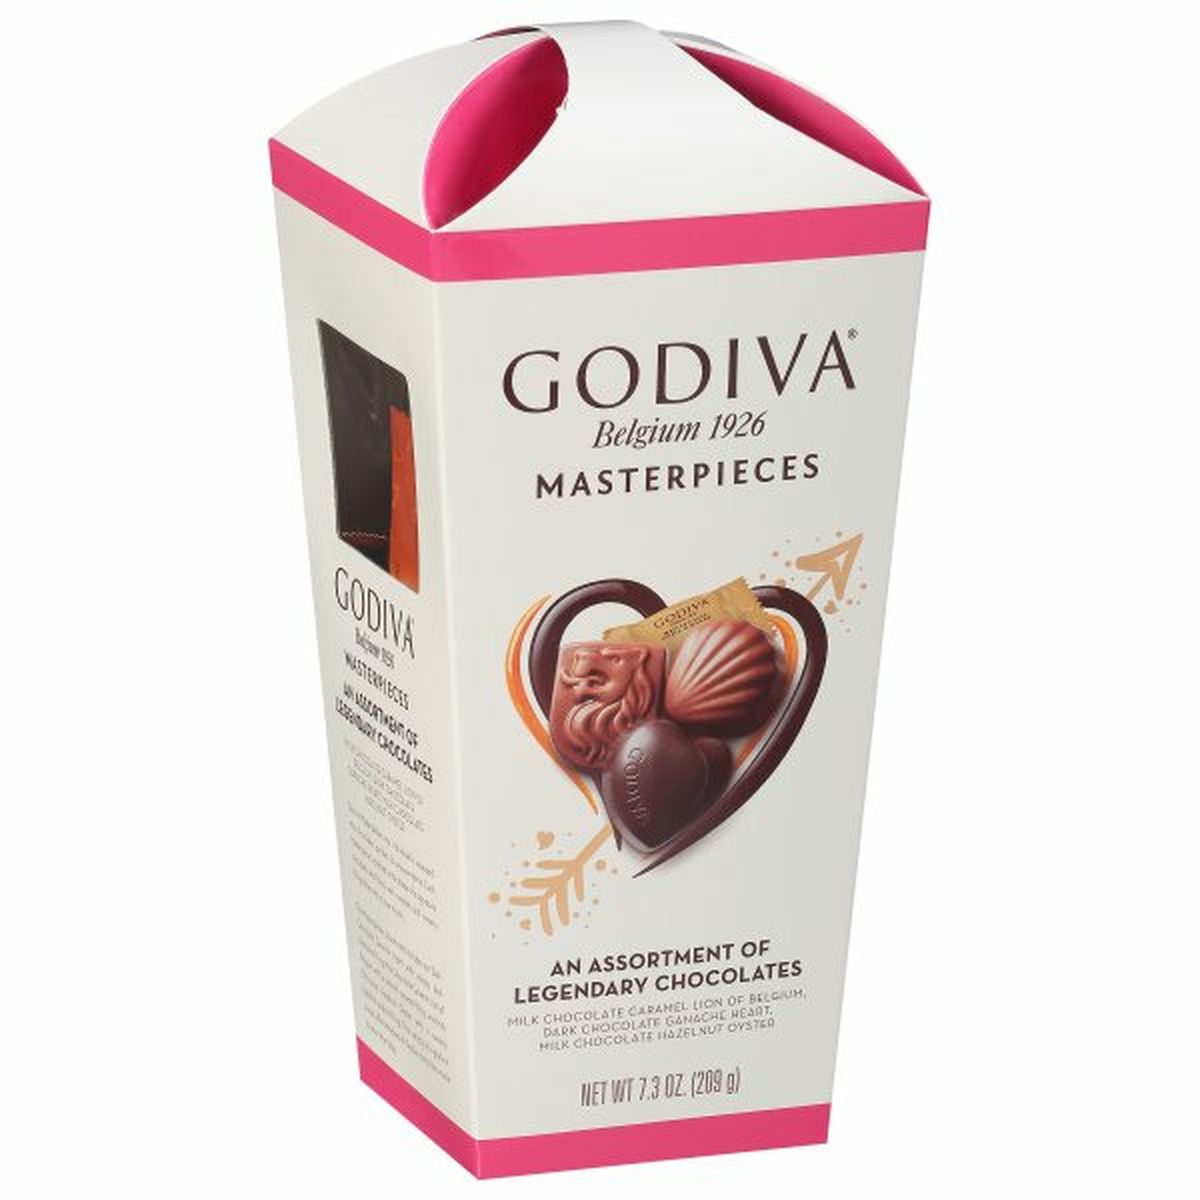 Calories in Godiva Masterpieces Chocolate, Assortment